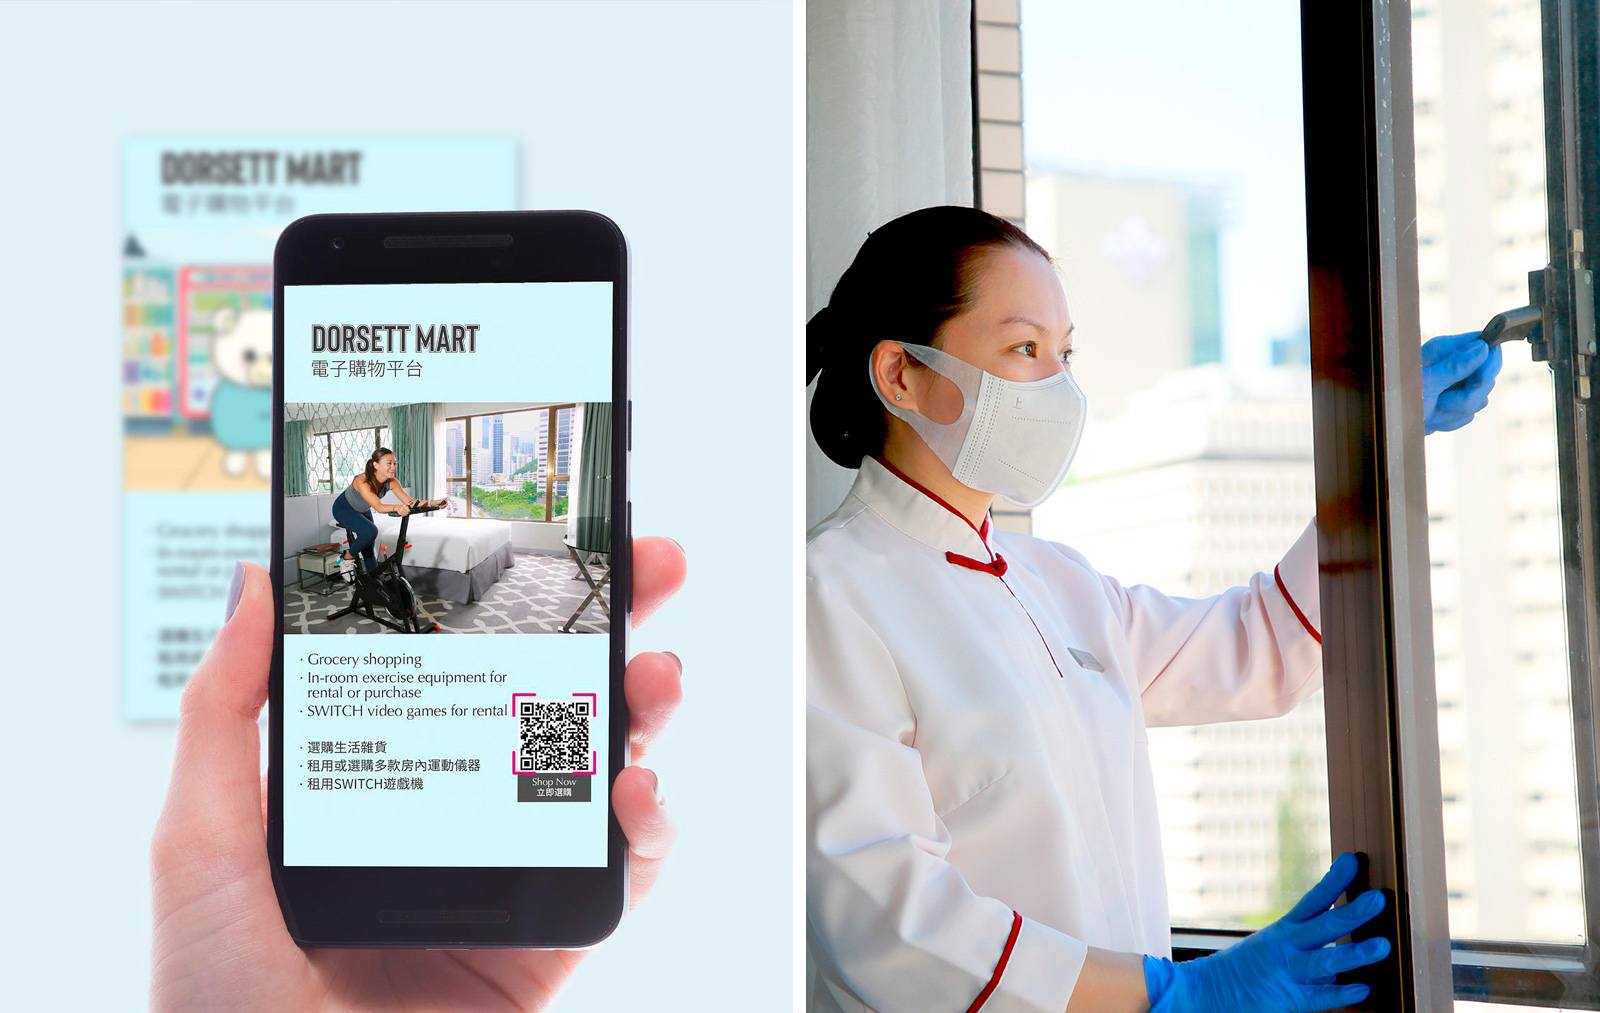 COVID-19 precautions for quarantine guests at Dorsett Wan Chai hotel in Hong Kong